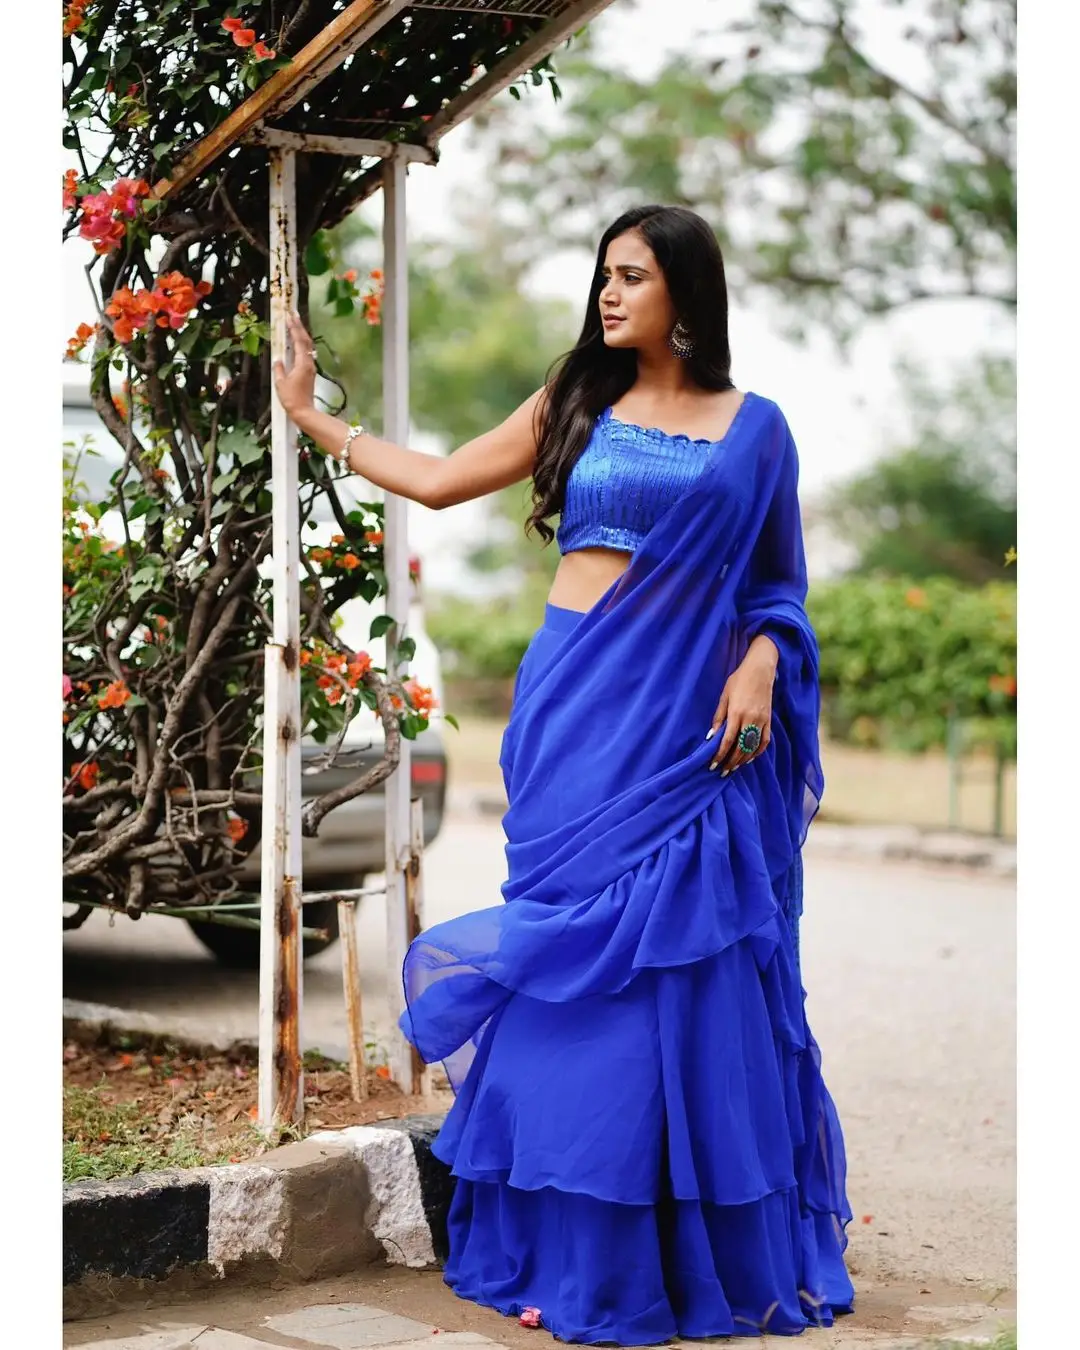 INDIAN GIRL KAVYA SHREE IN TRADITIONAL BLUE SAREE SLEEVELESS BLOUSE 2